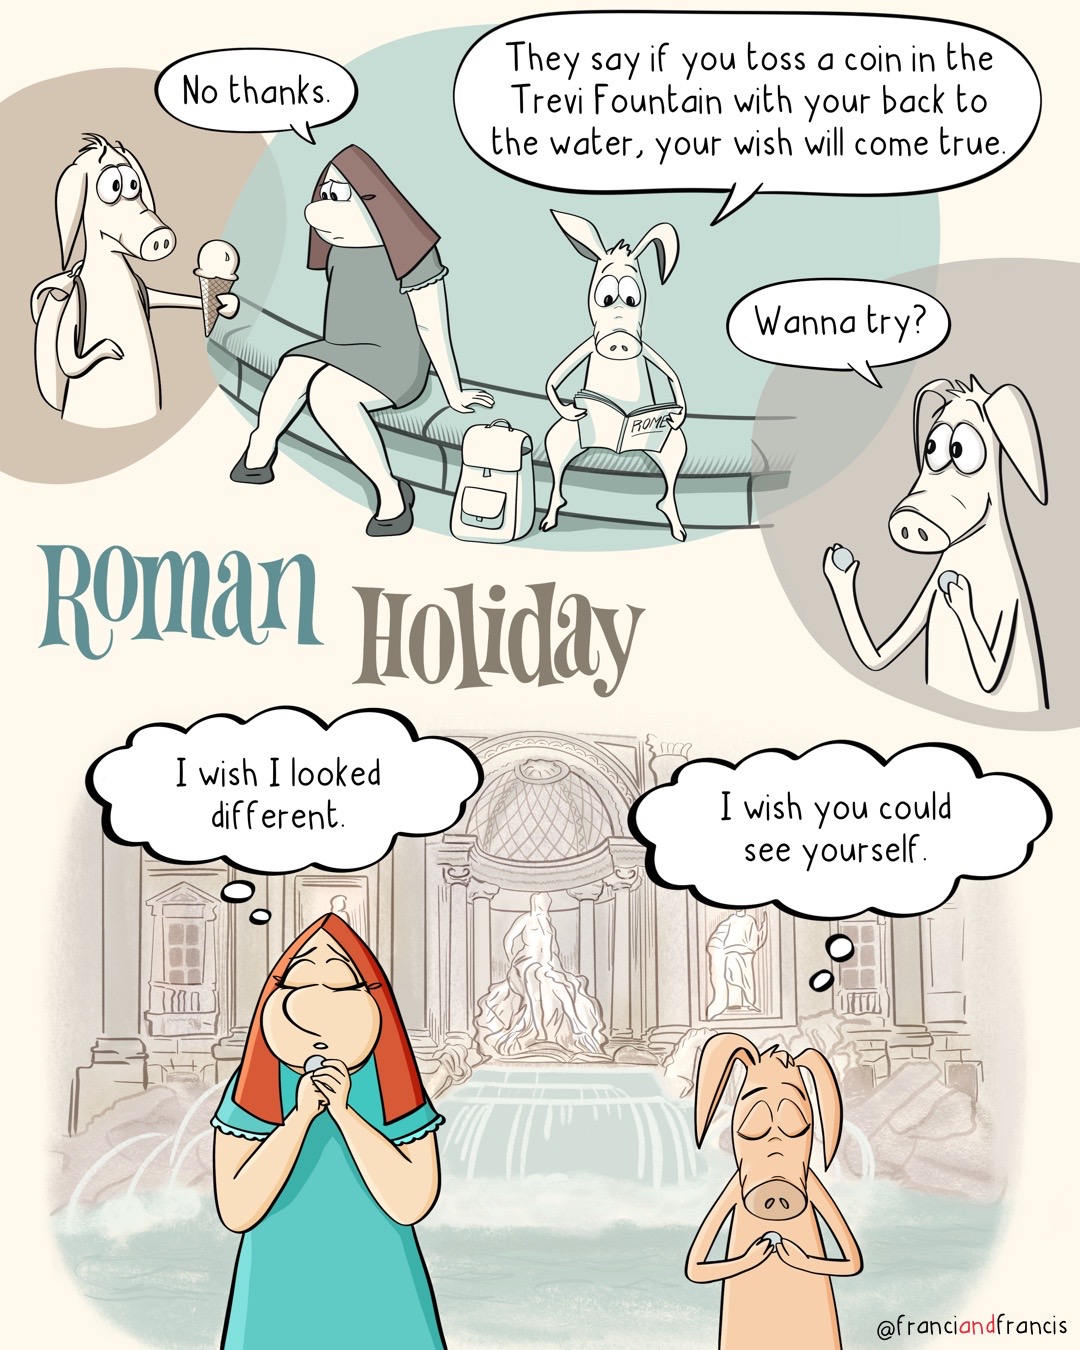 Roman Holiday: Trevi